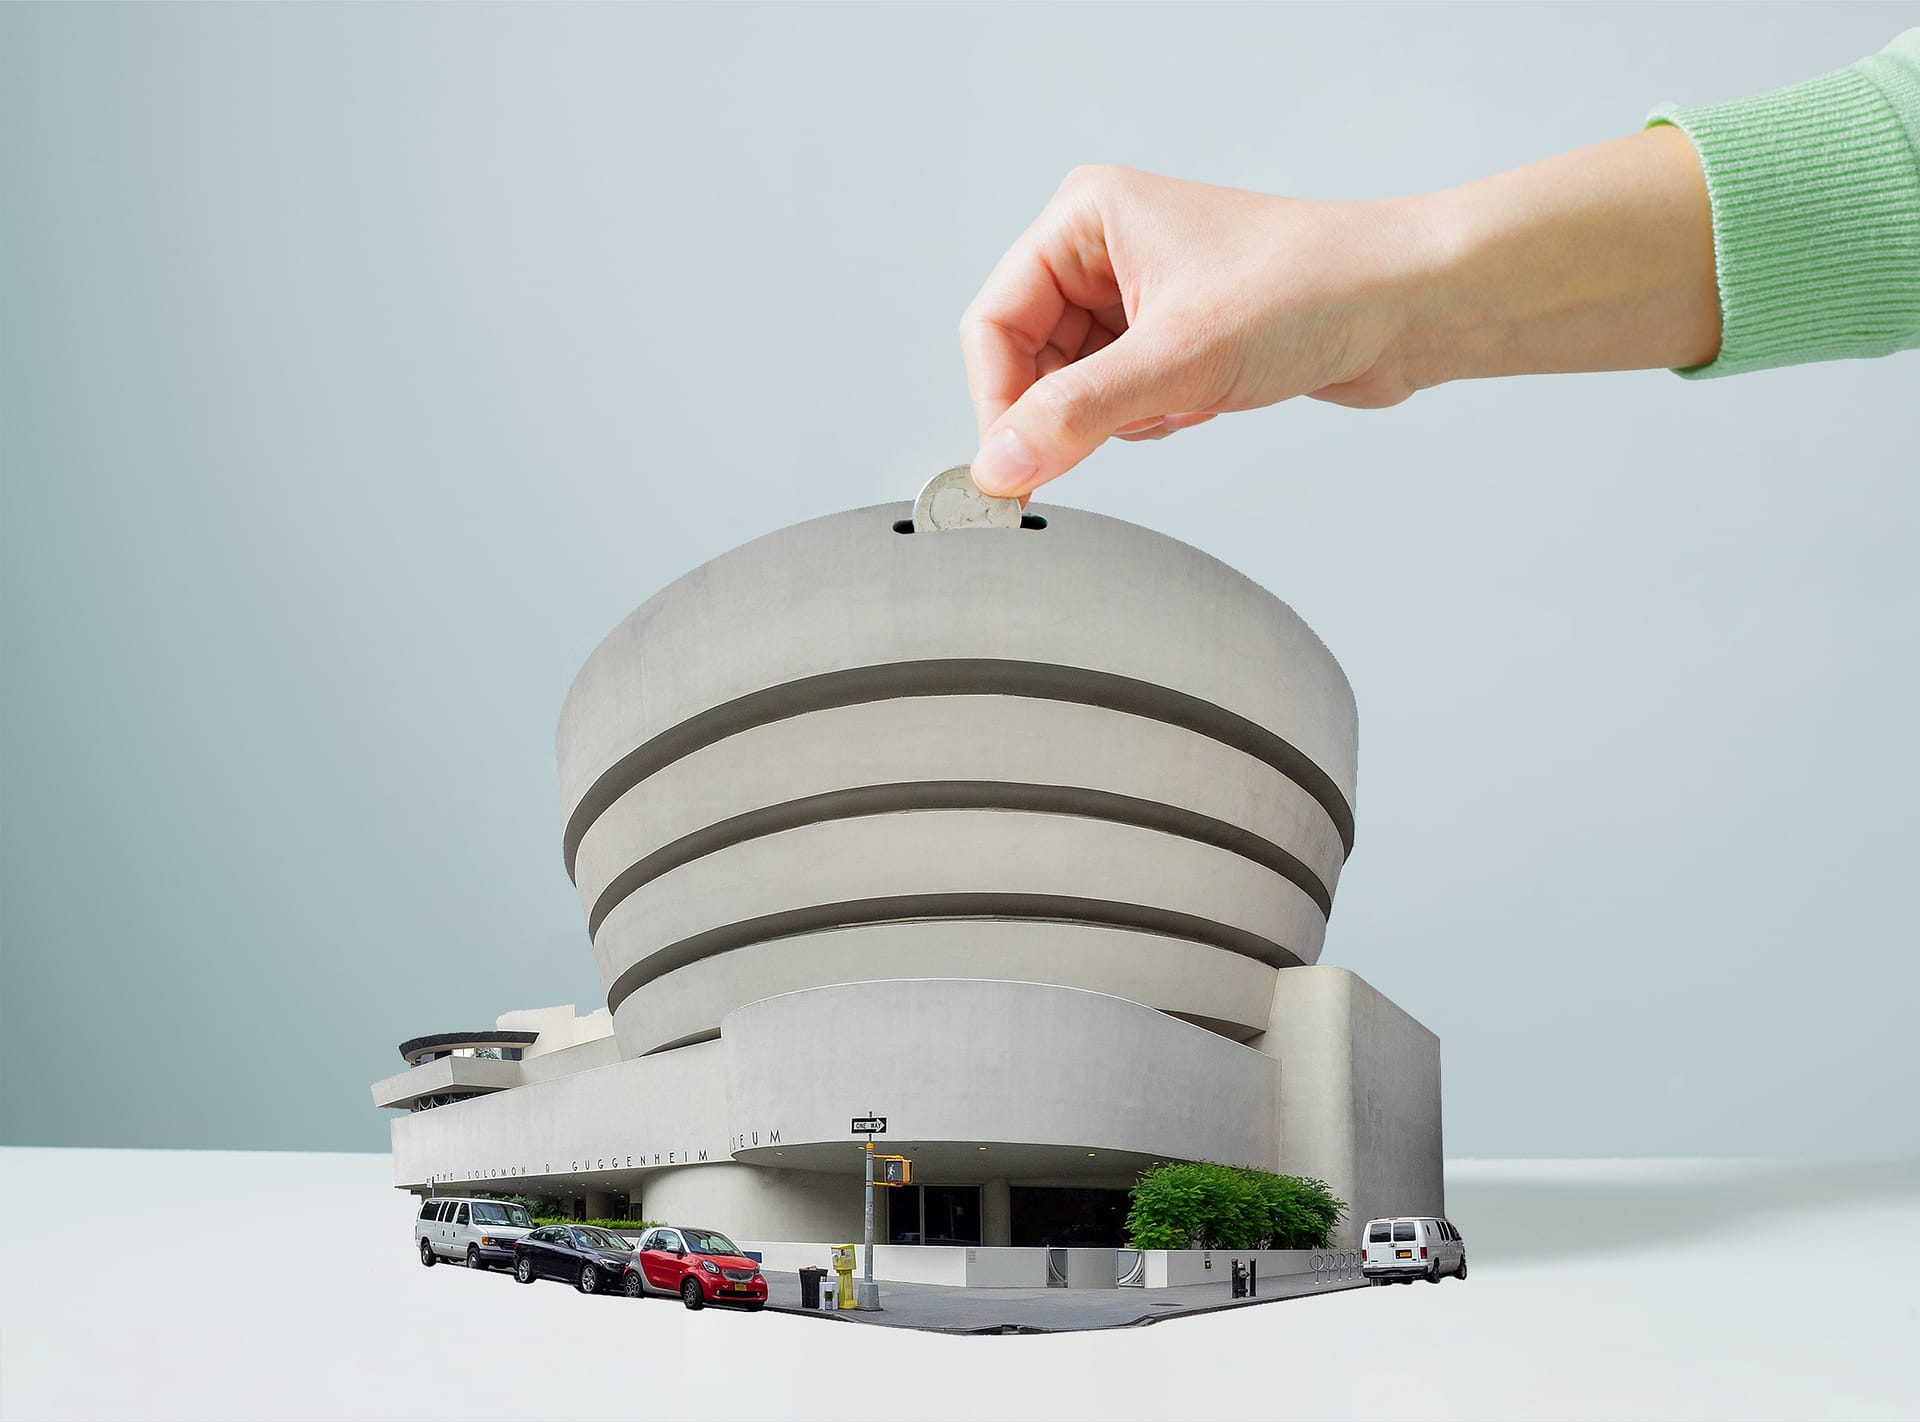 Guggenheim Raises Ticket Costs as US Museums Get Pricier